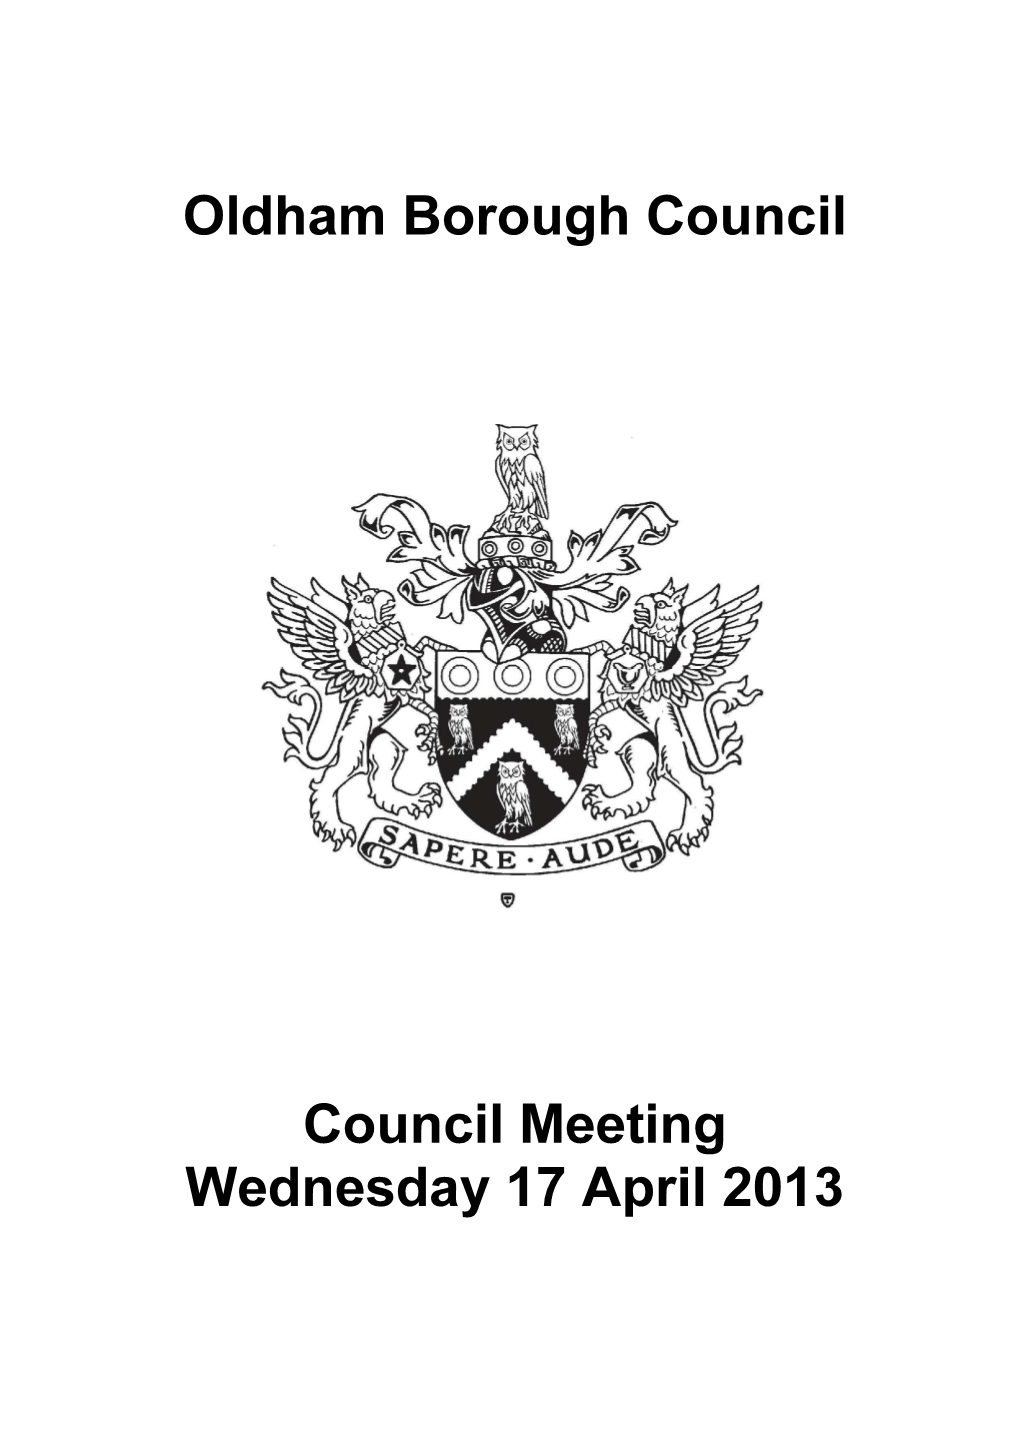 Oldham Borough Council Council Meeting Wednesday 17 April 2013